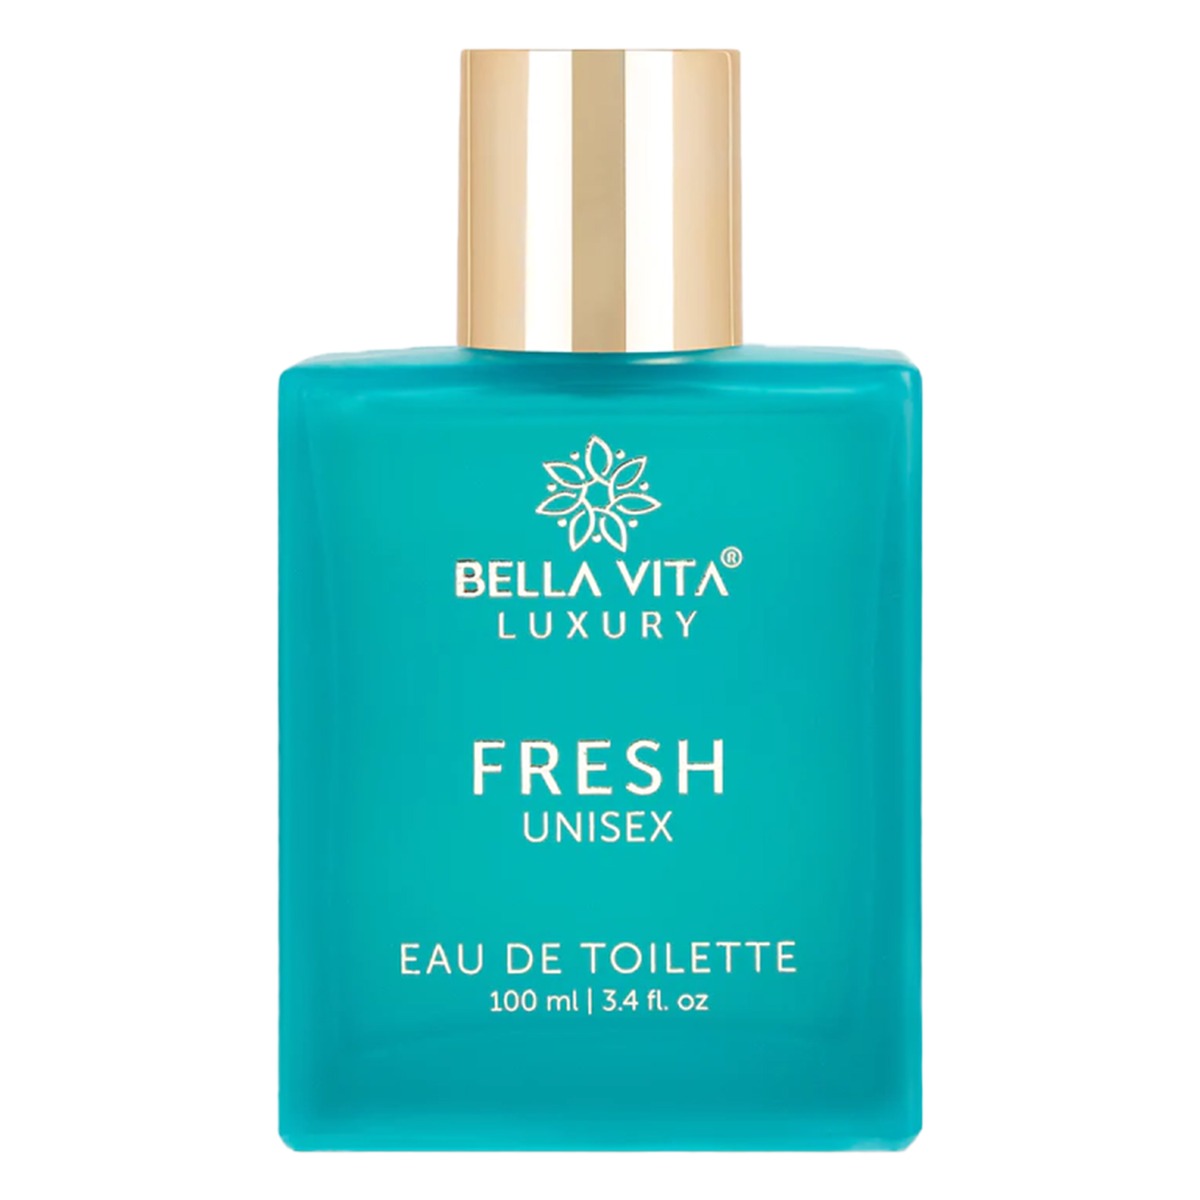 Bella Vita Organic Luxury Fresh Unisex Eau De Toilette Perfume, 100ml